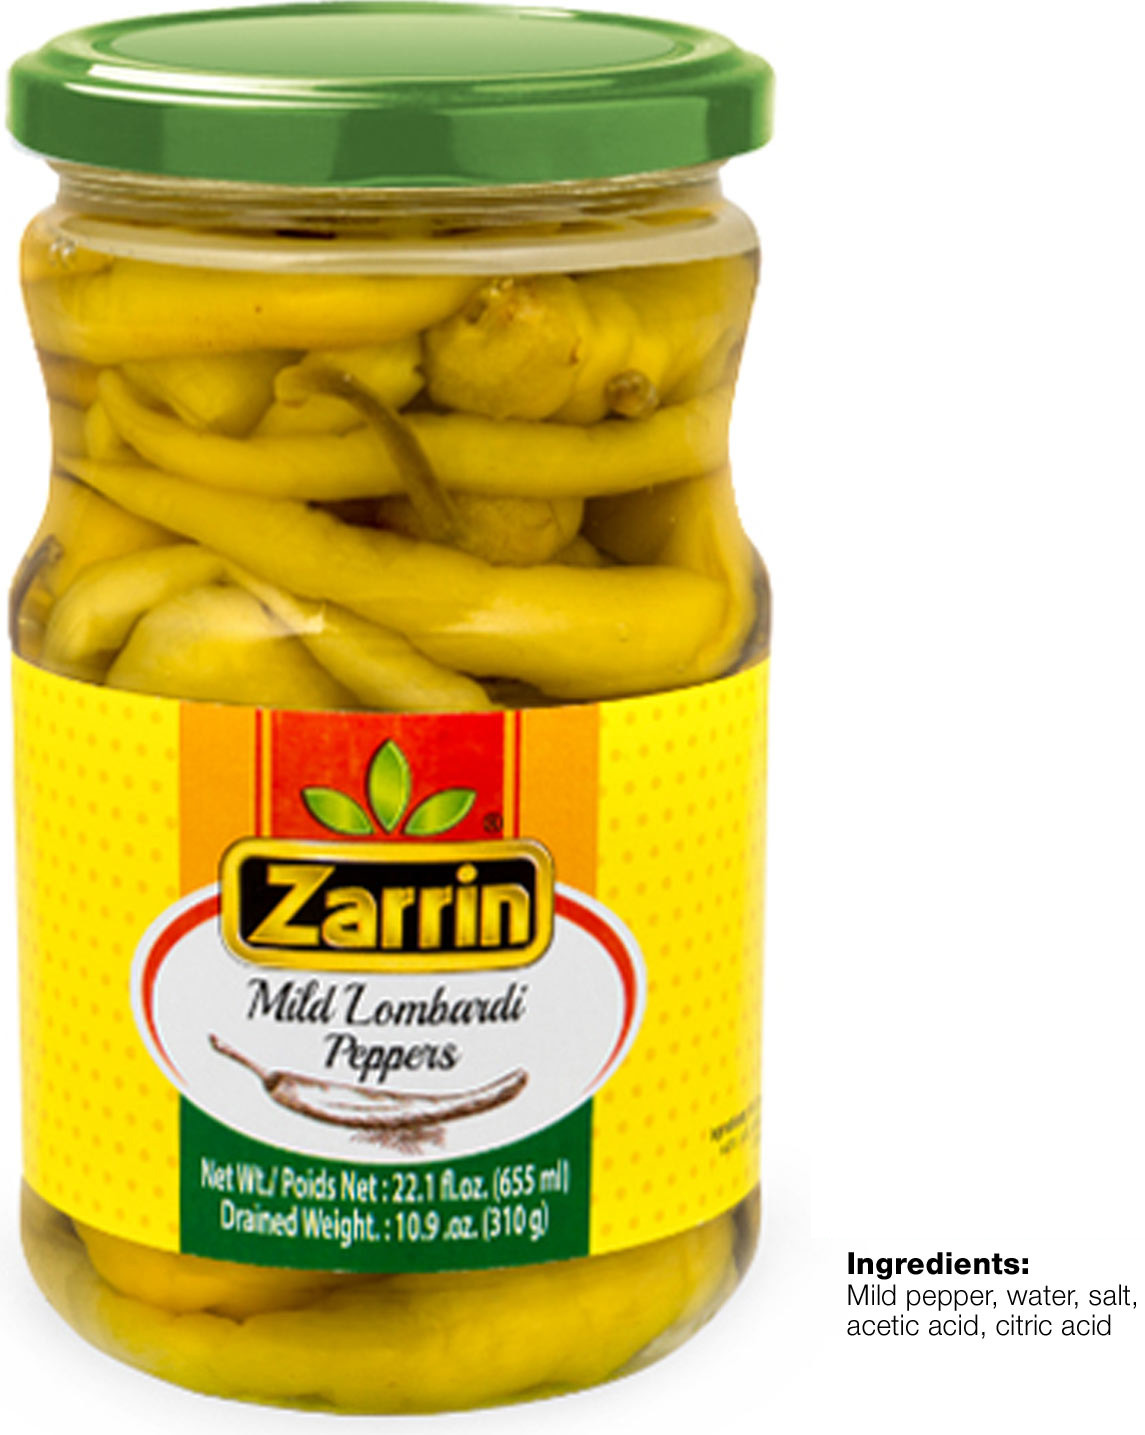 Zarrin mild lombardi peppers in 22.1 oz glass jar.